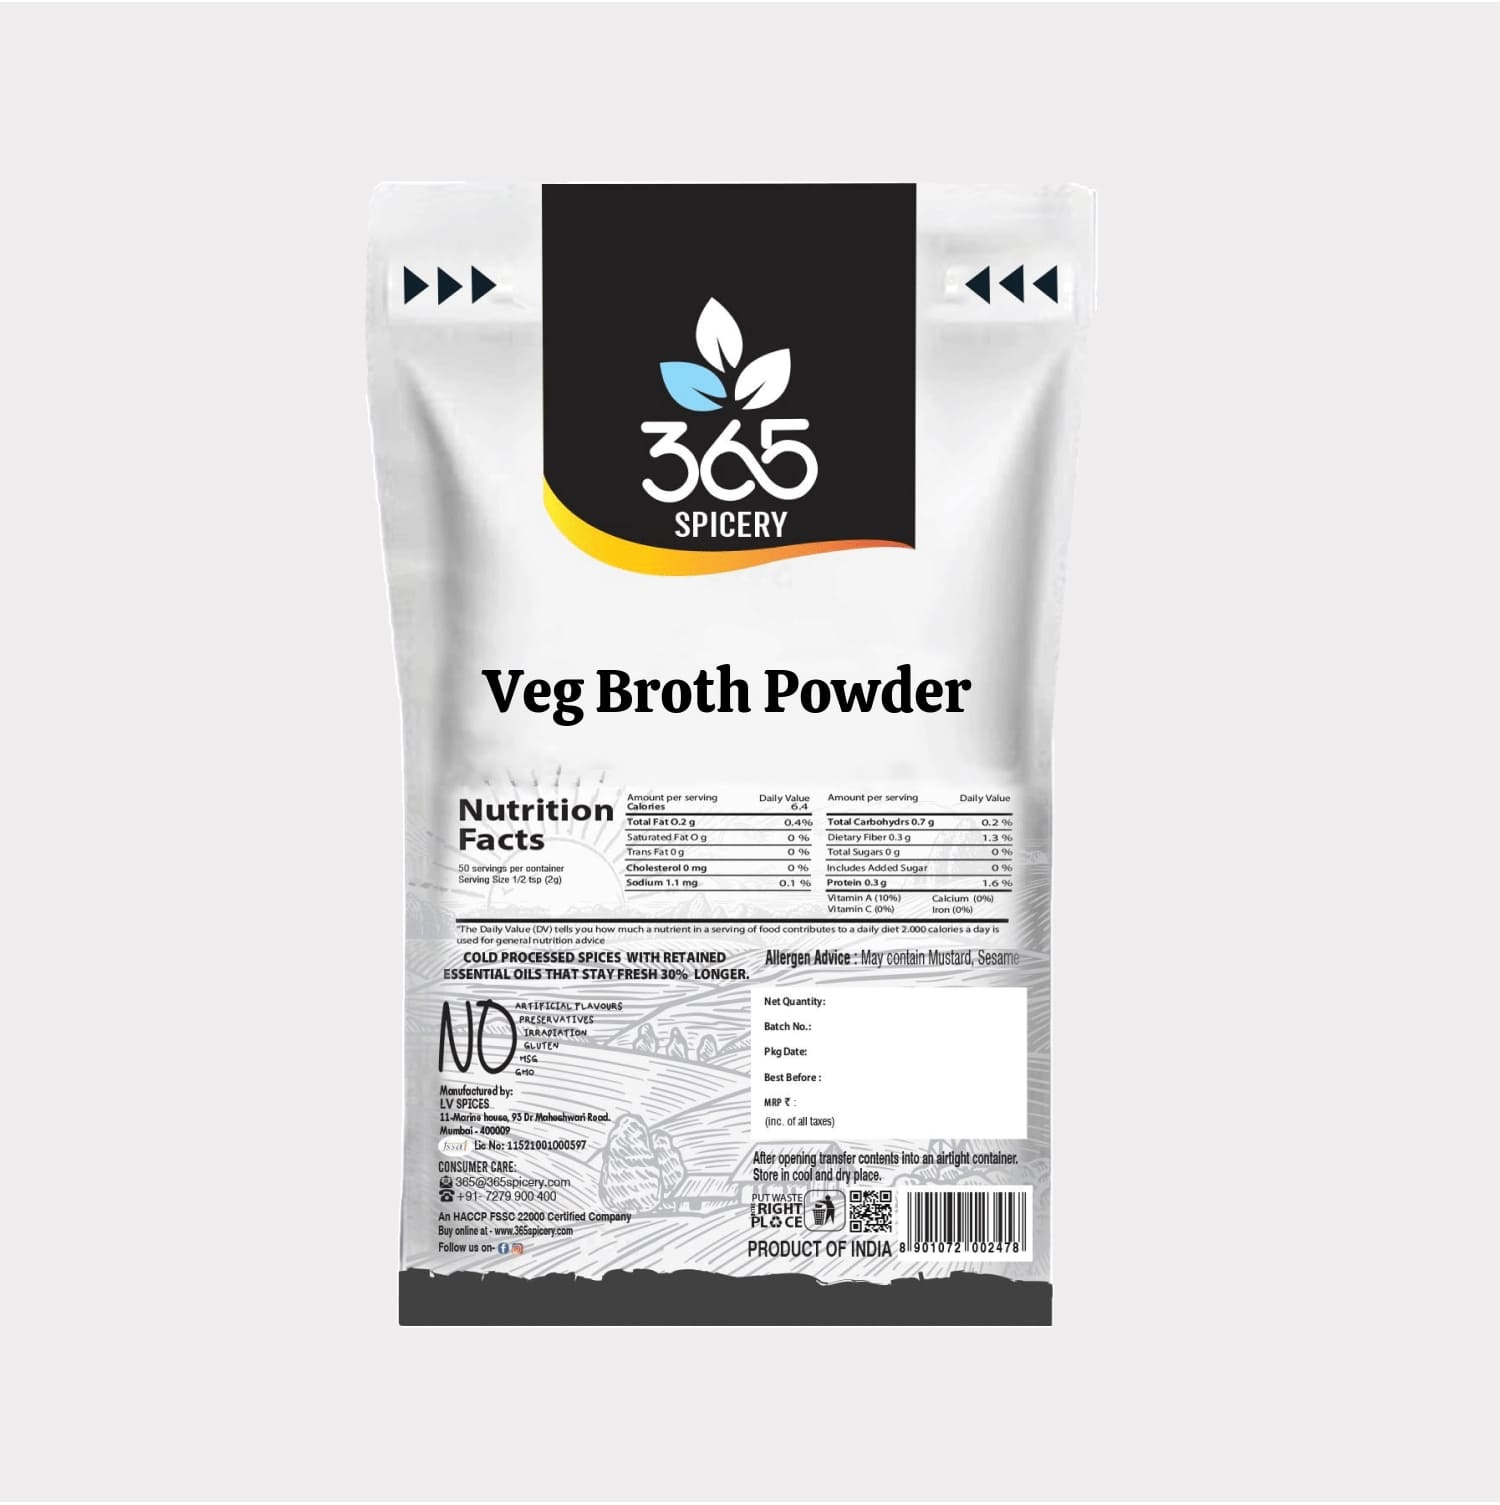 Veg Broth Powder